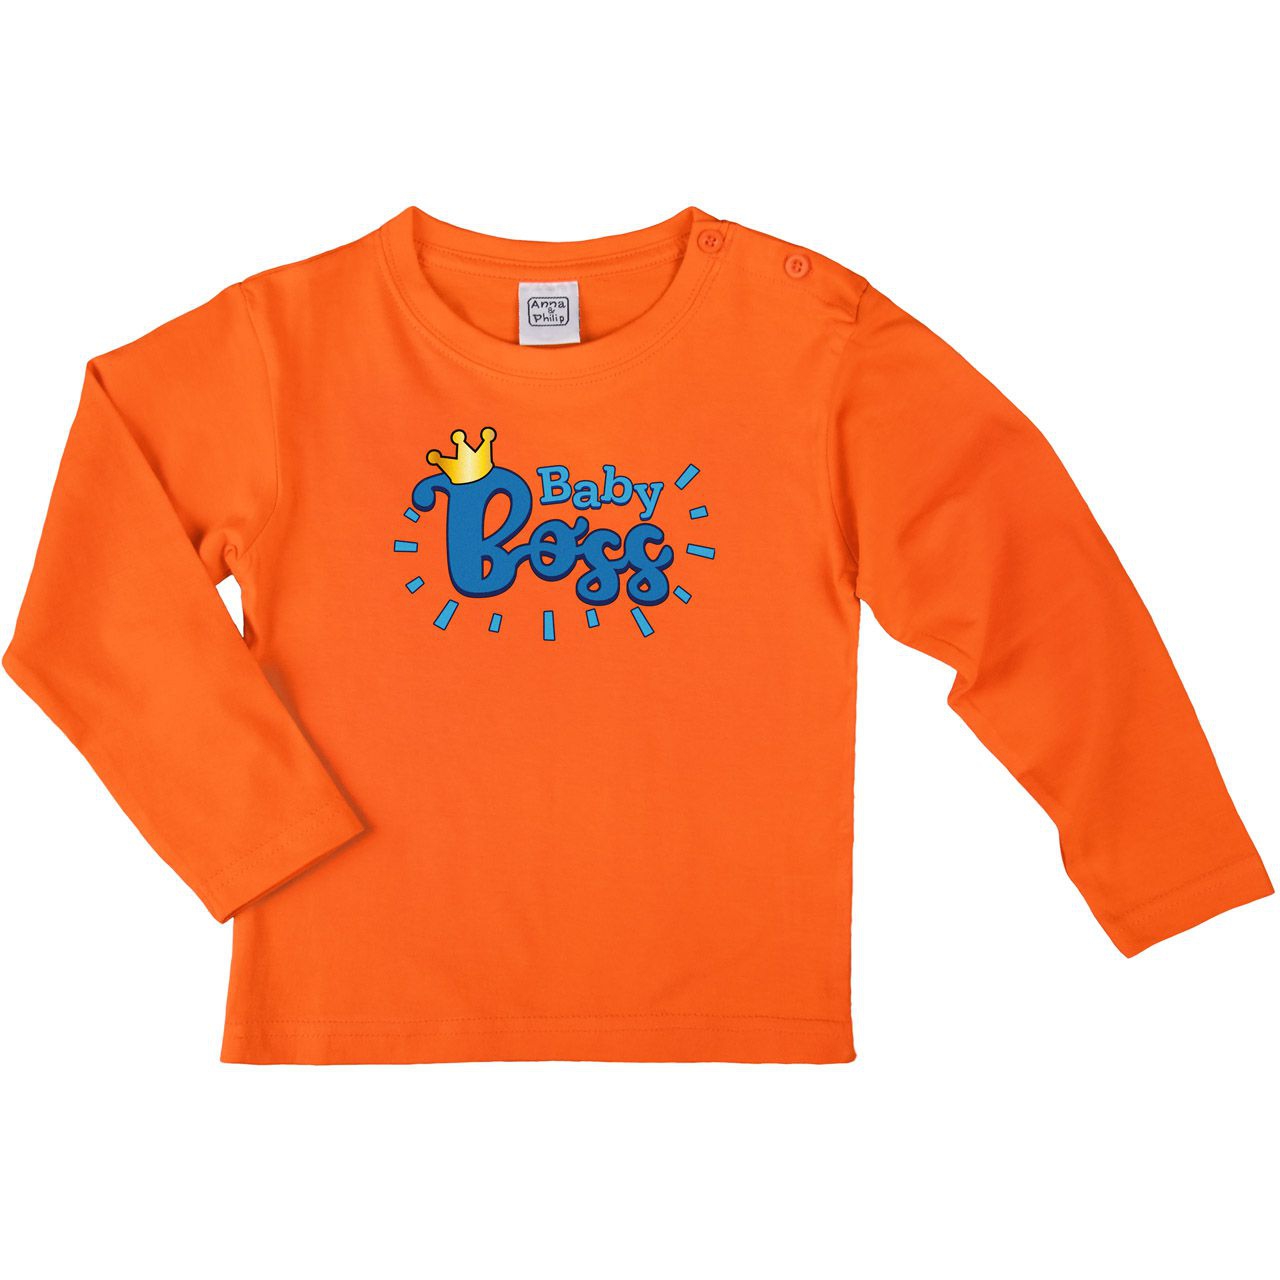 Baby Boss Blau Kinder Langarm Shirt orange 56 / 62